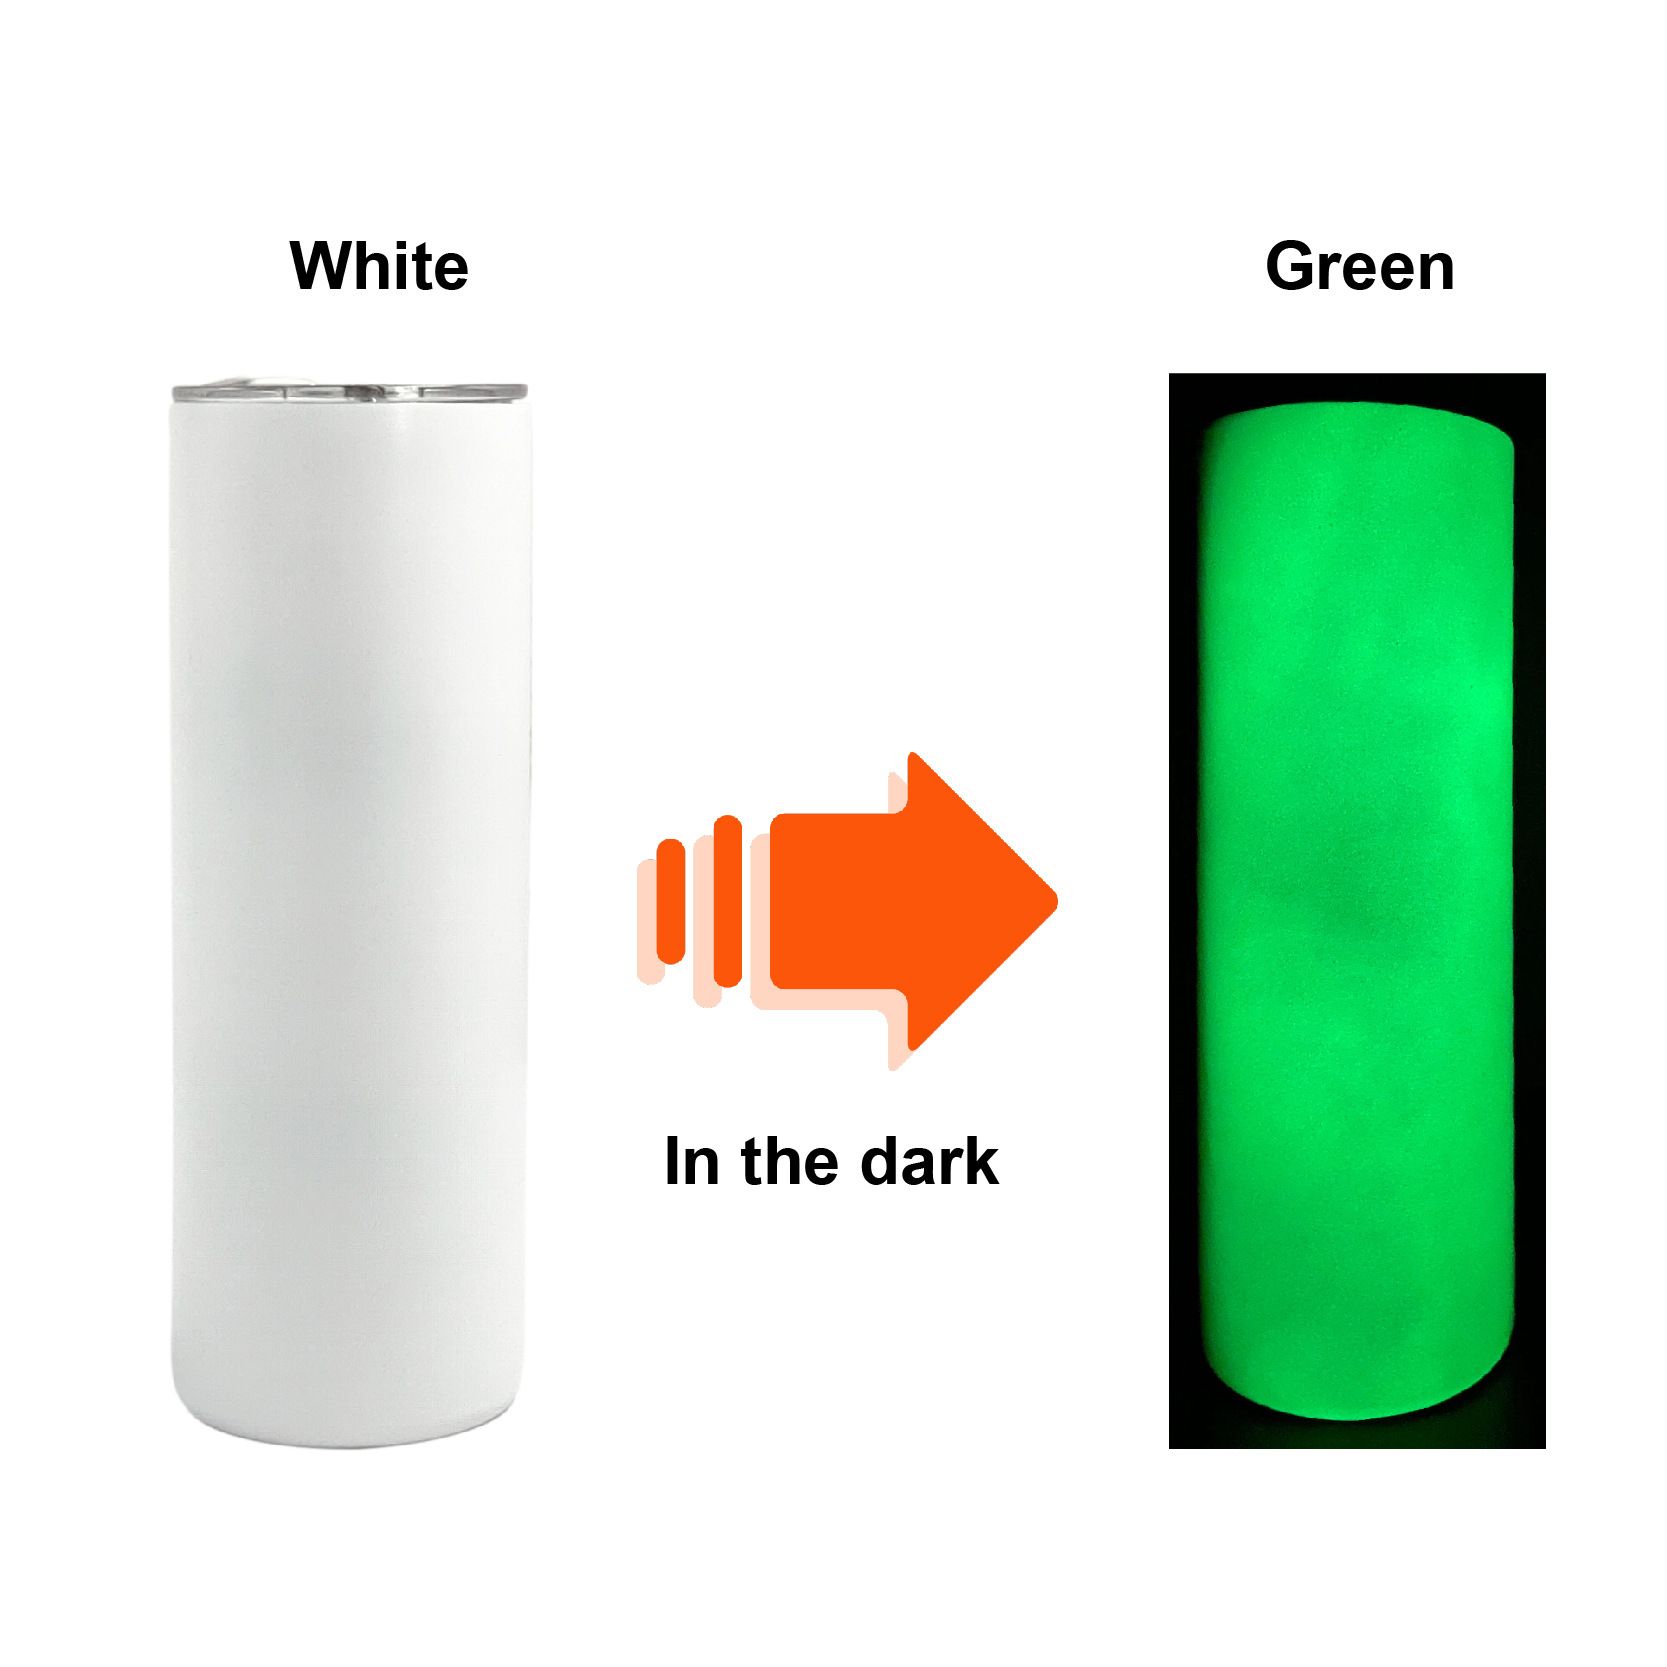 blanco a verde